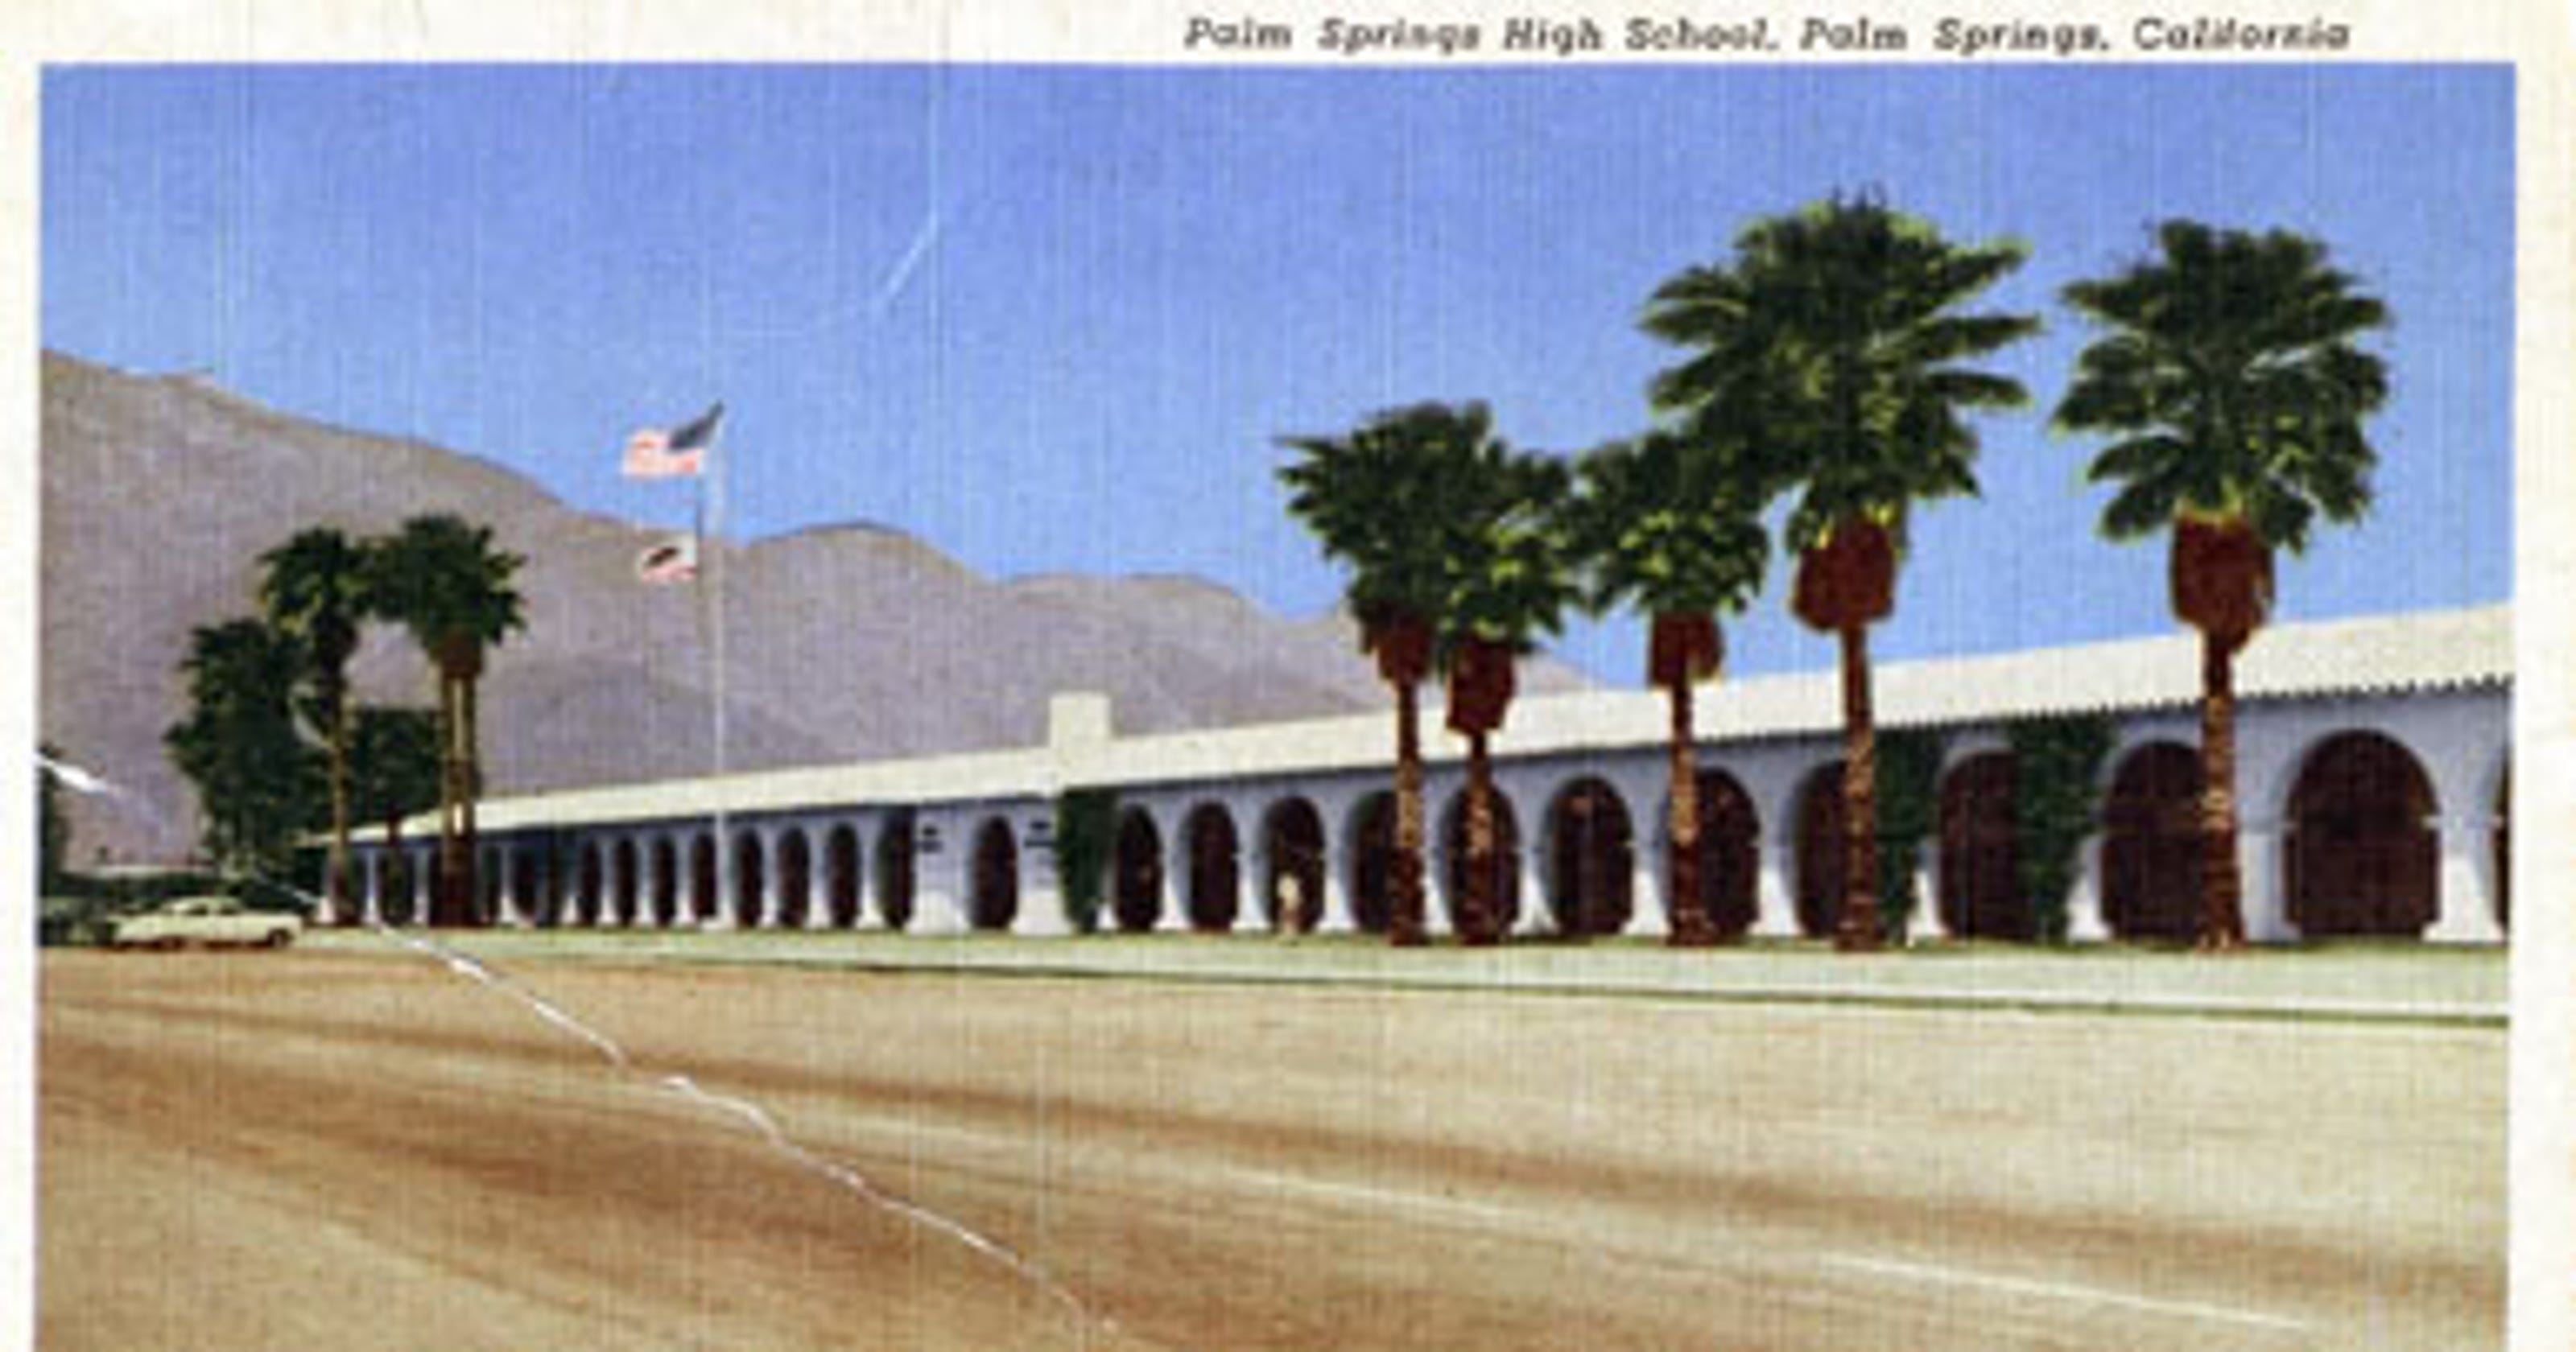 How Palm Springs High School got its start